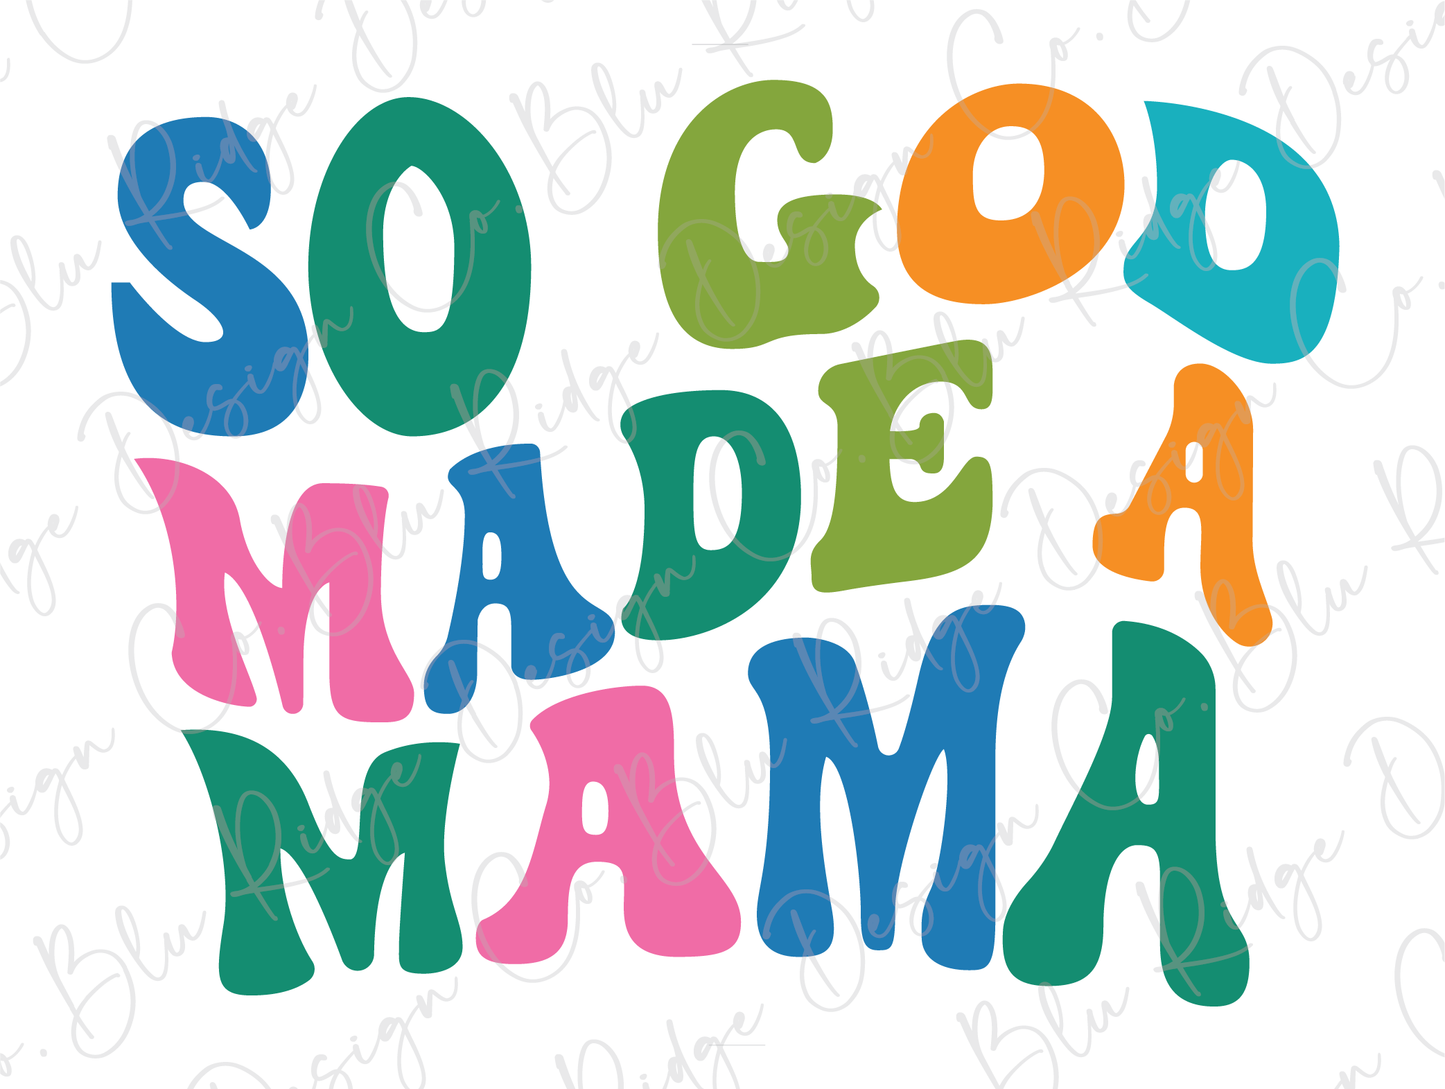 So God Made a Mama Retro Groovy Colorful Design Direct To Film (DTF) Transfer